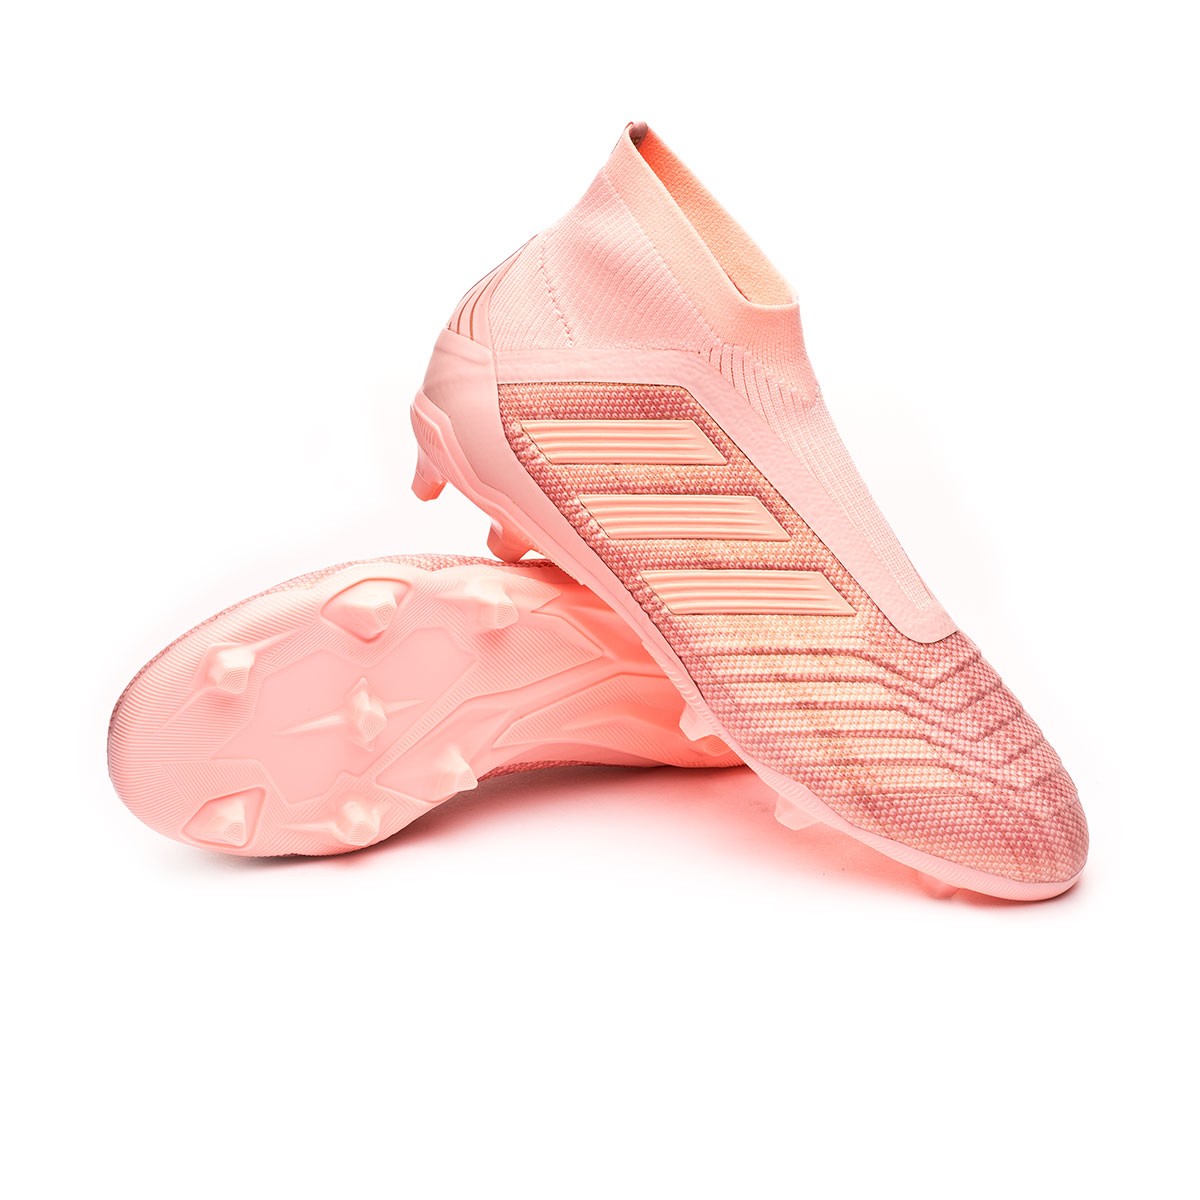 adidas predator pink boots